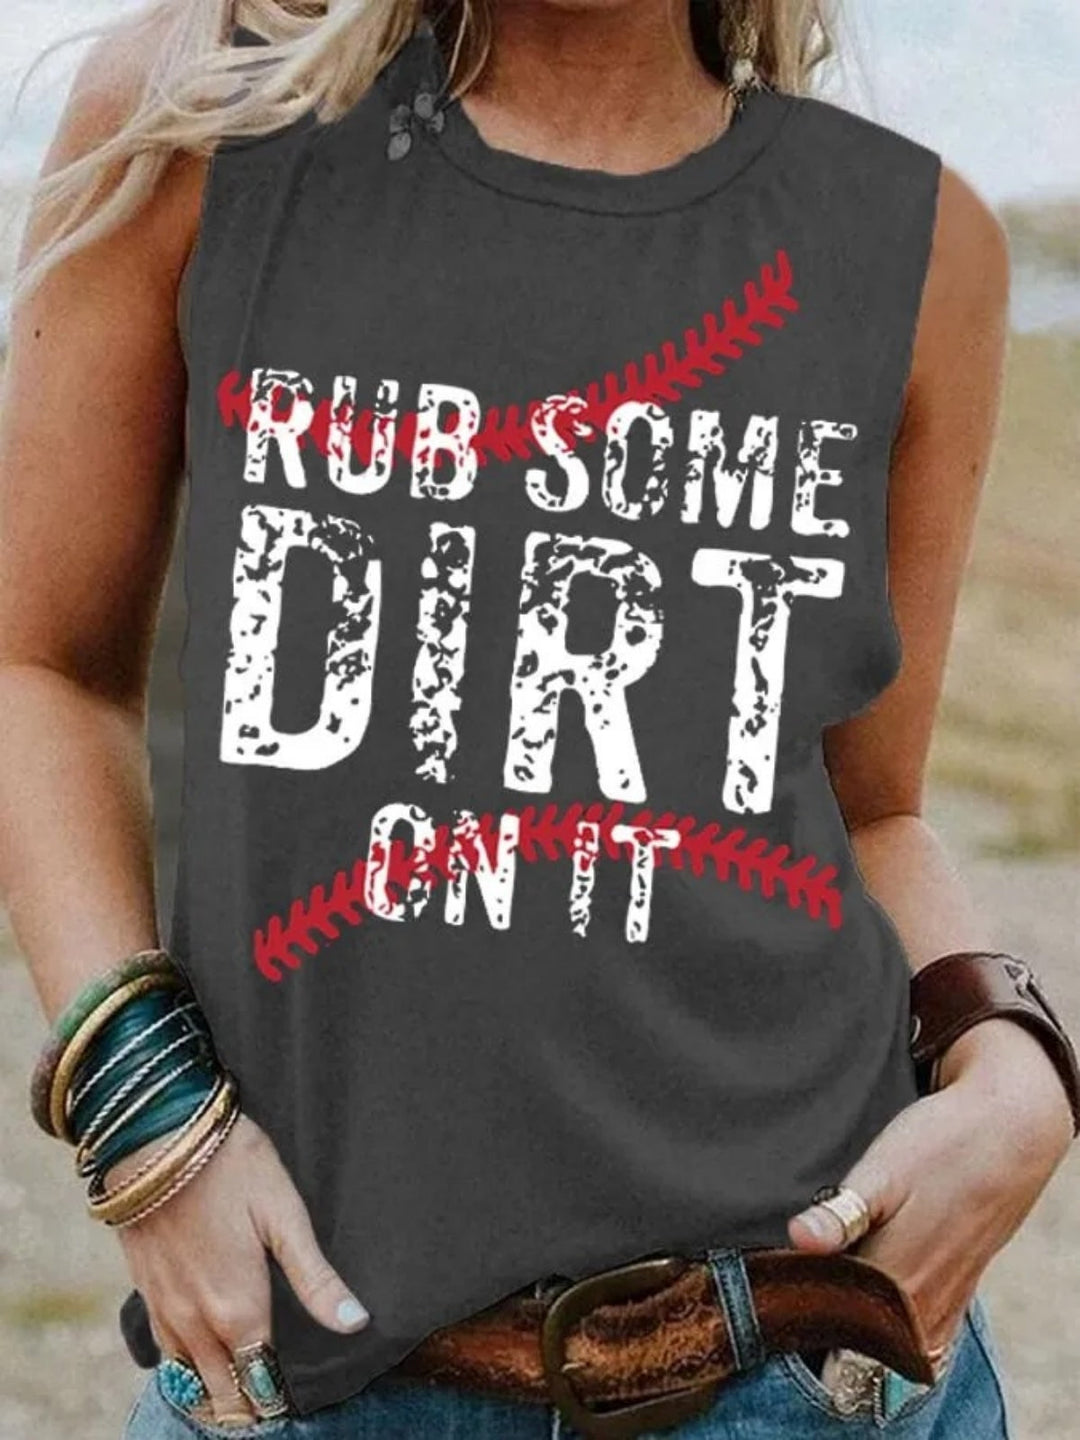 Get Some Dirt On It Sport Vest